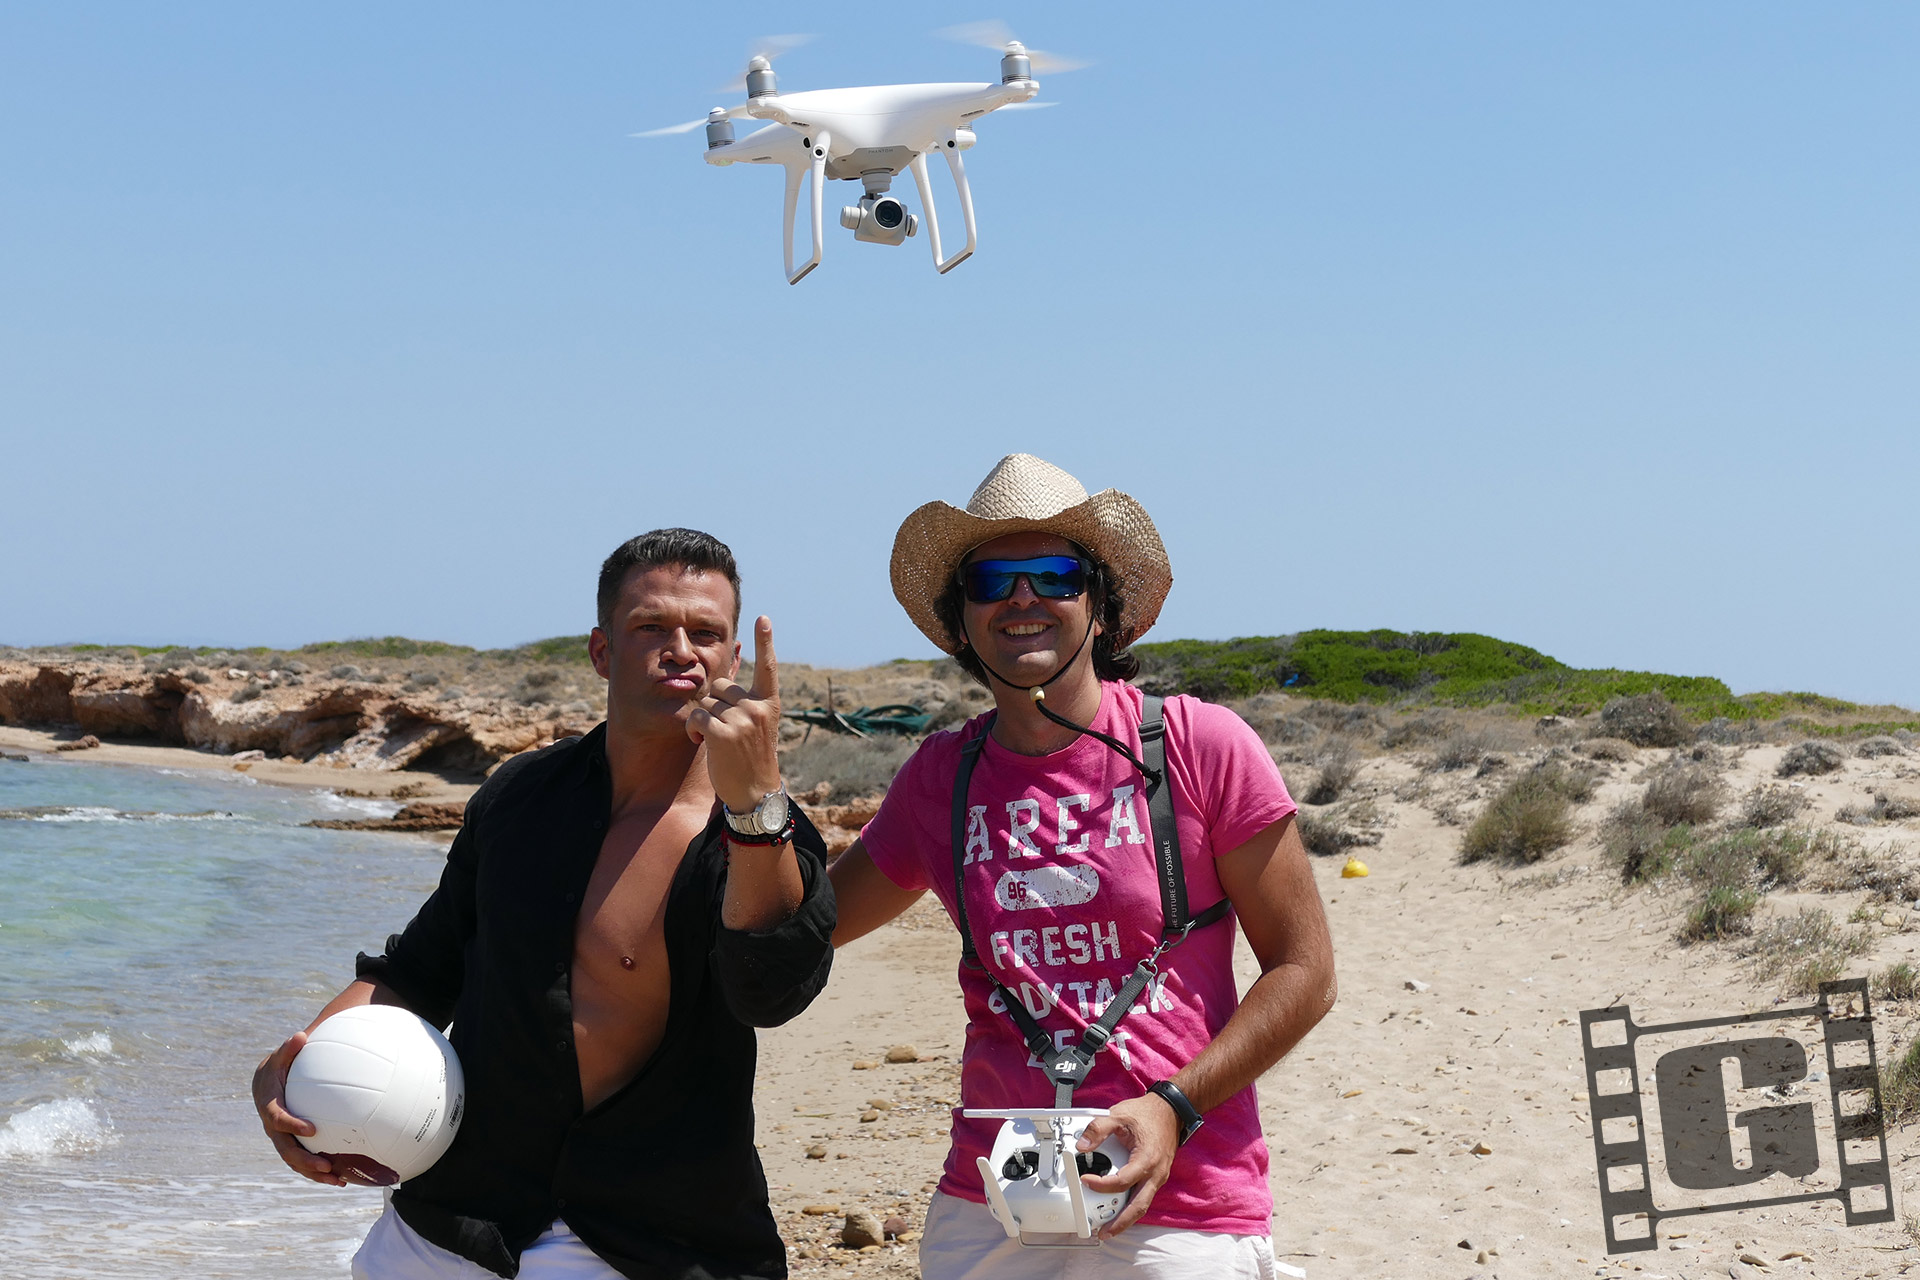 Survival, Kostas Sommer, Epsilon TV, Kourouta beach, Chris Giatrakos, Drone